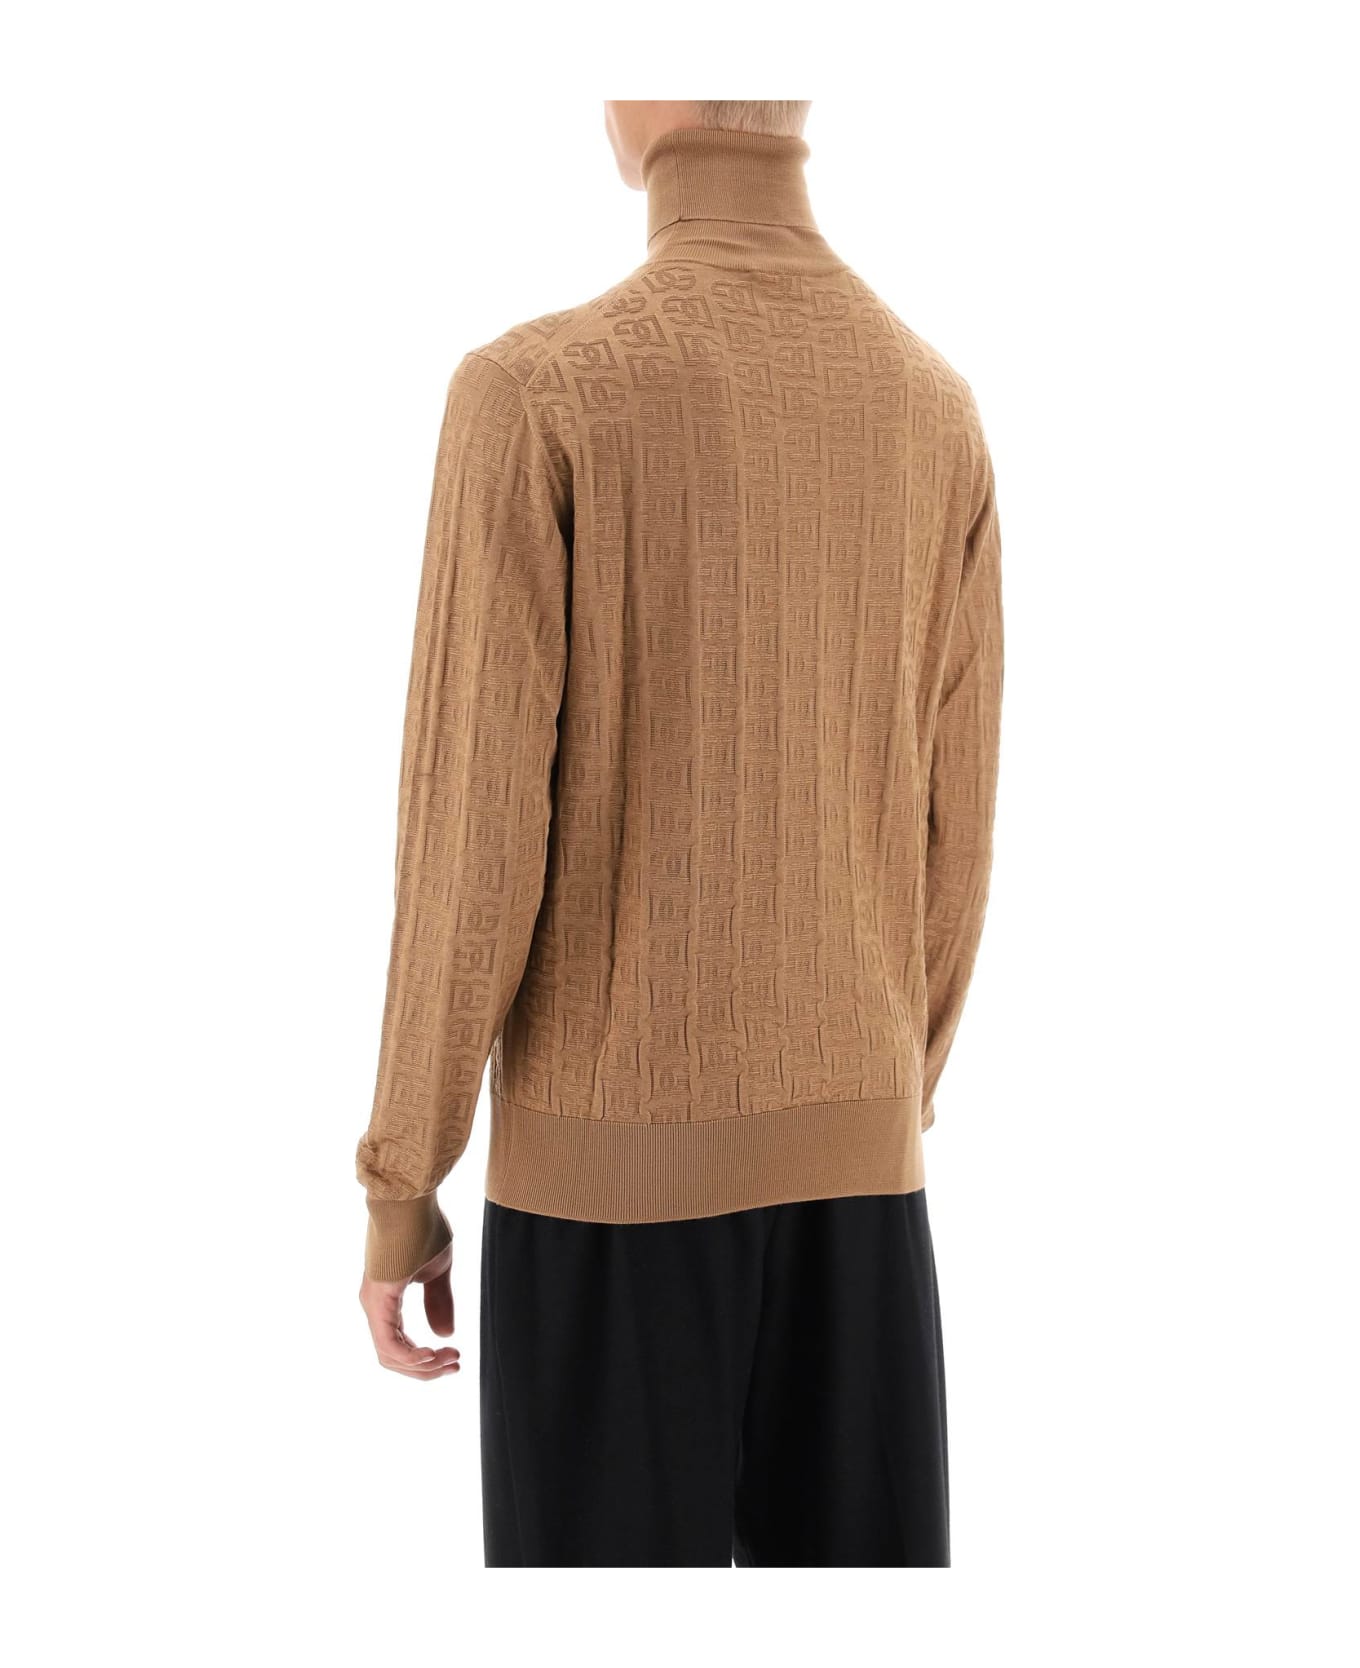 Dolce & Gabbana Logo Monogram Turtleneck Sweater - CAMMELLO SCURO (Brown)